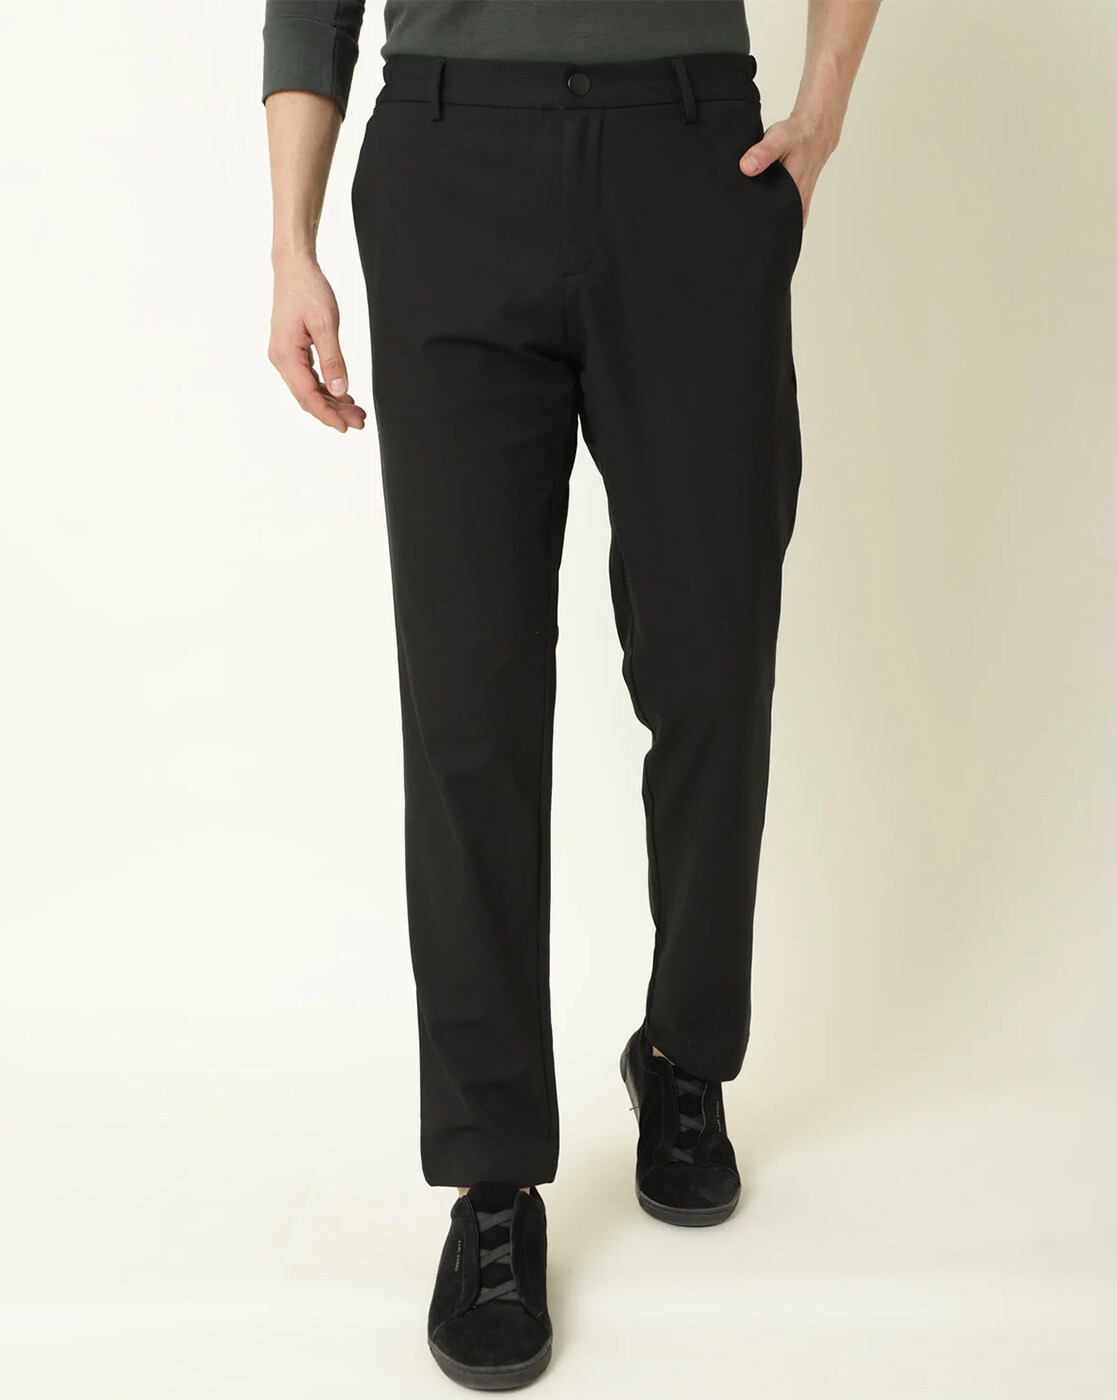 Buy Beige Trousers & Pants for Boys by AJIO Online | Ajio.com